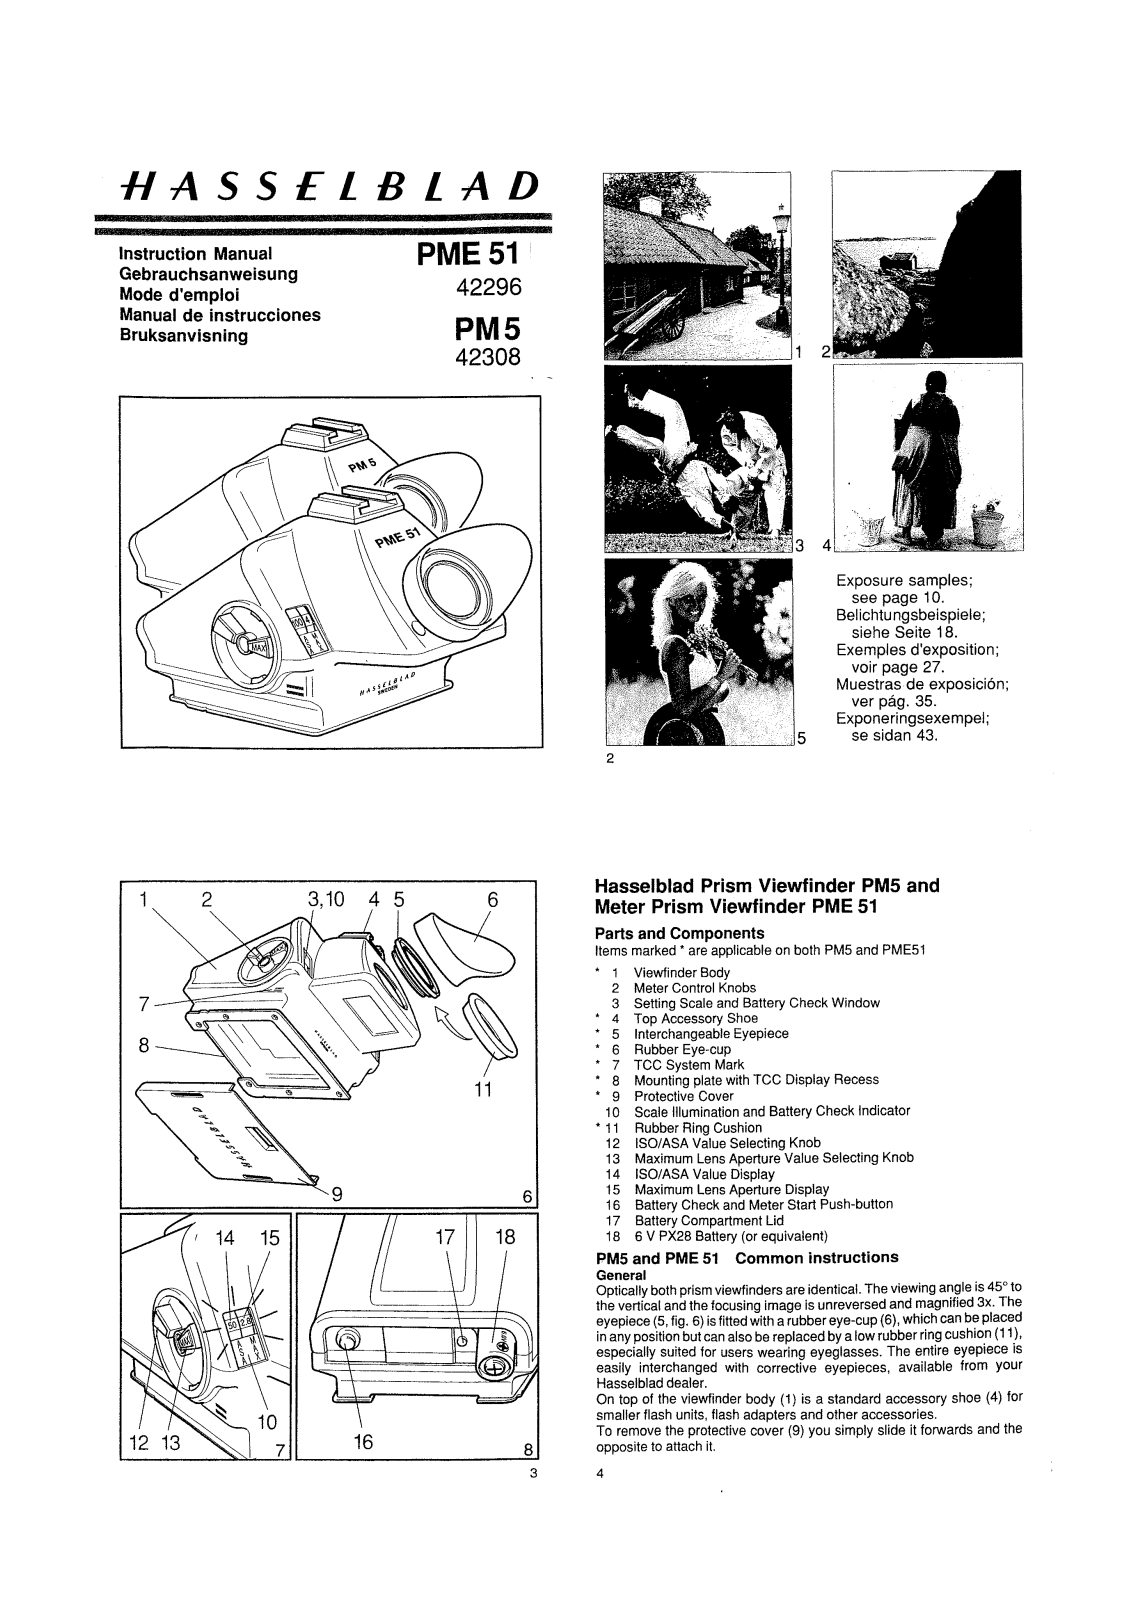 Hasselblad PME 51, PM5 Manual